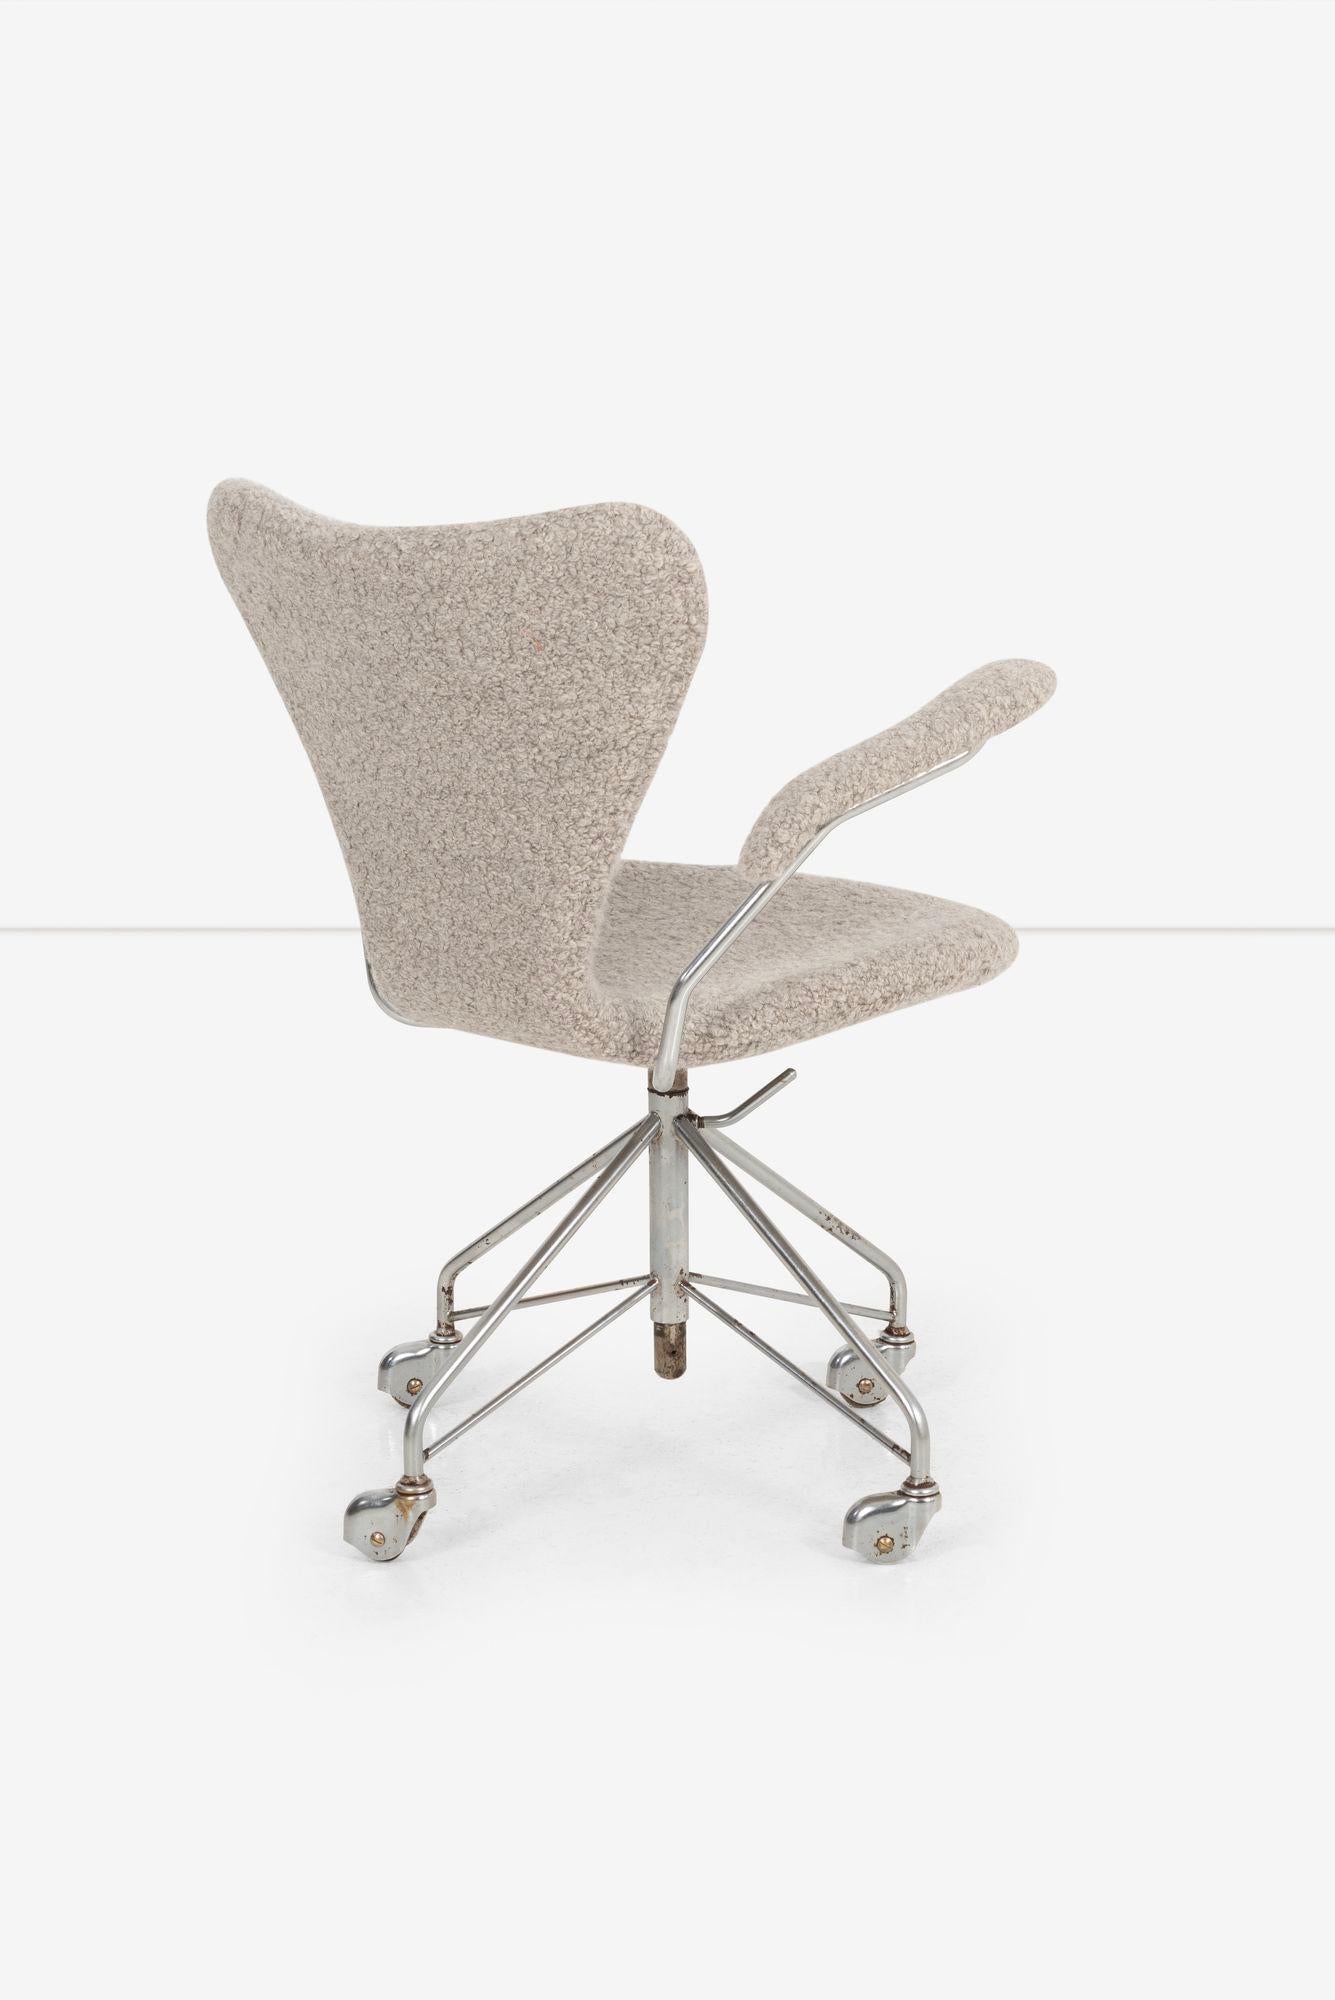 Arne Jacobsen Sevener Desk Chair, model 3117 In Good Condition For Sale In Chicago, IL